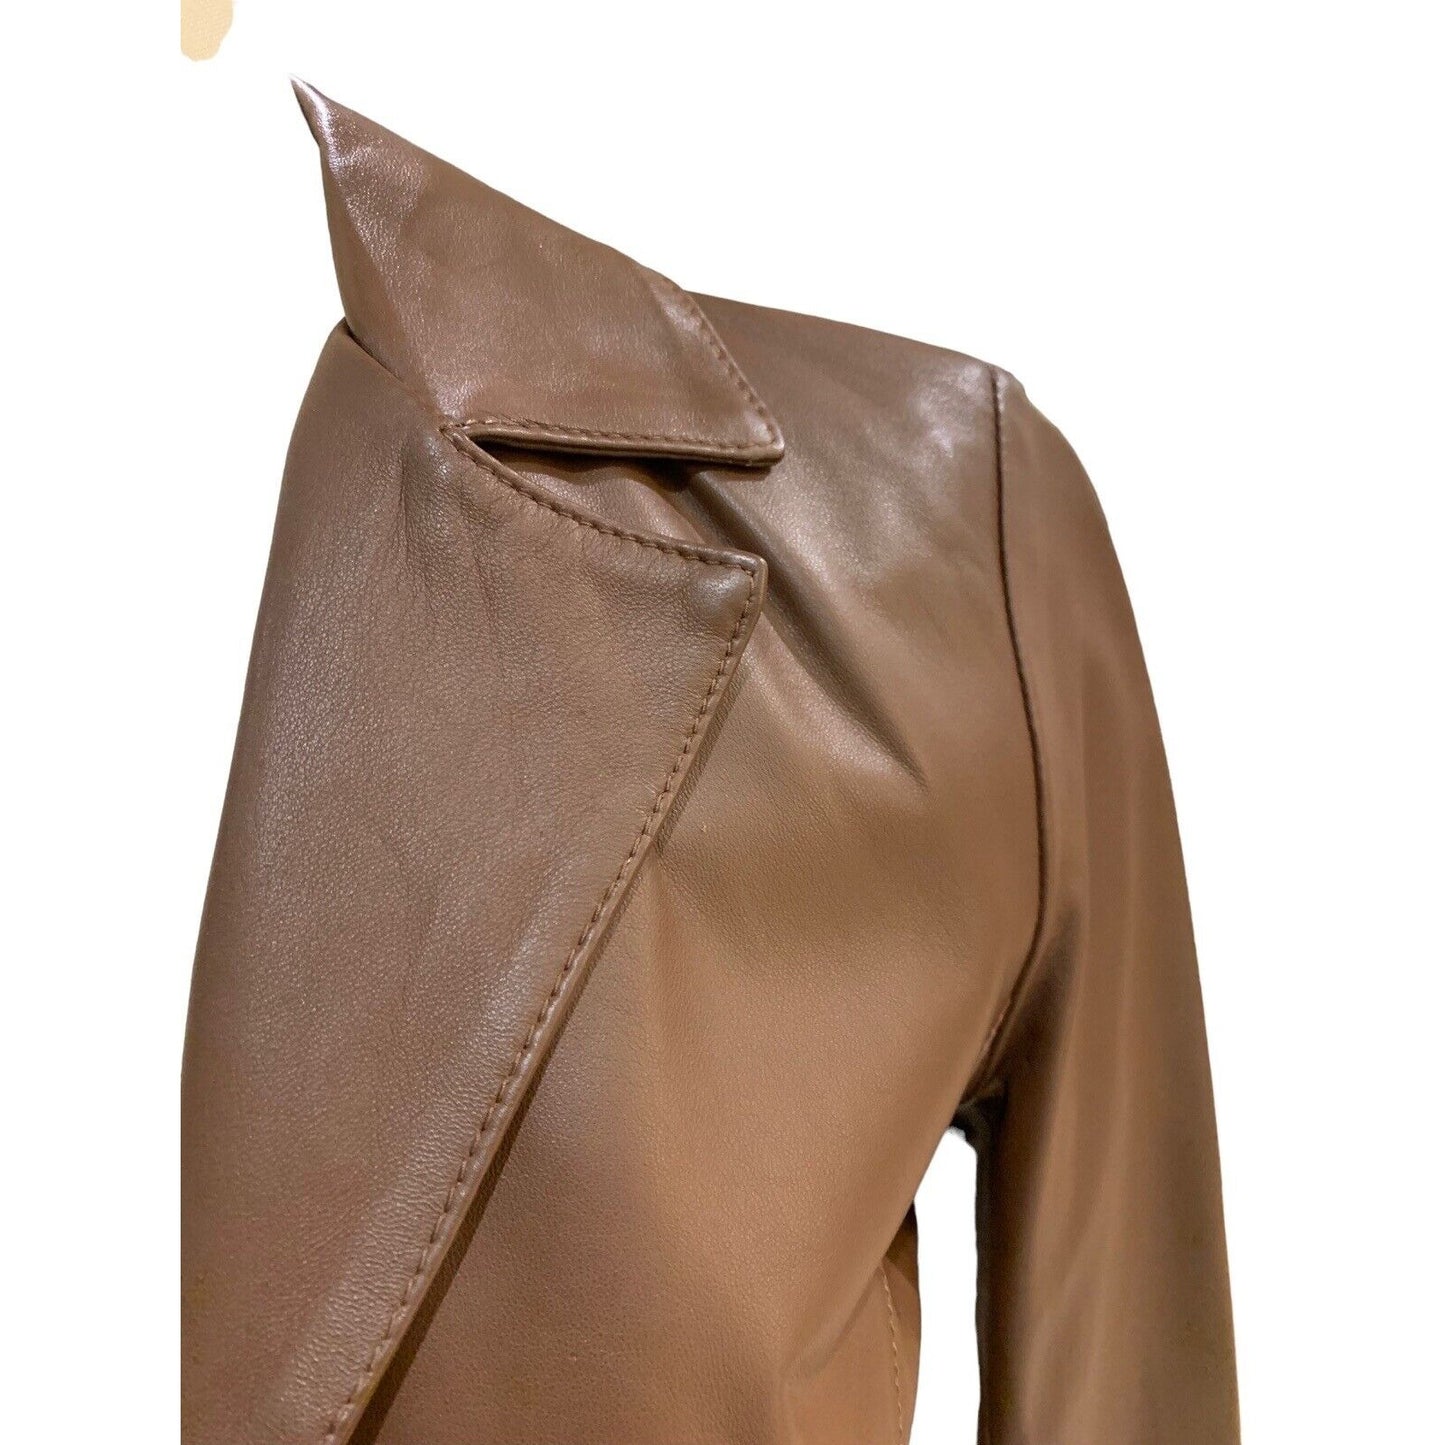 Canipelle Women’s Nappa Leather Blazer Jacket